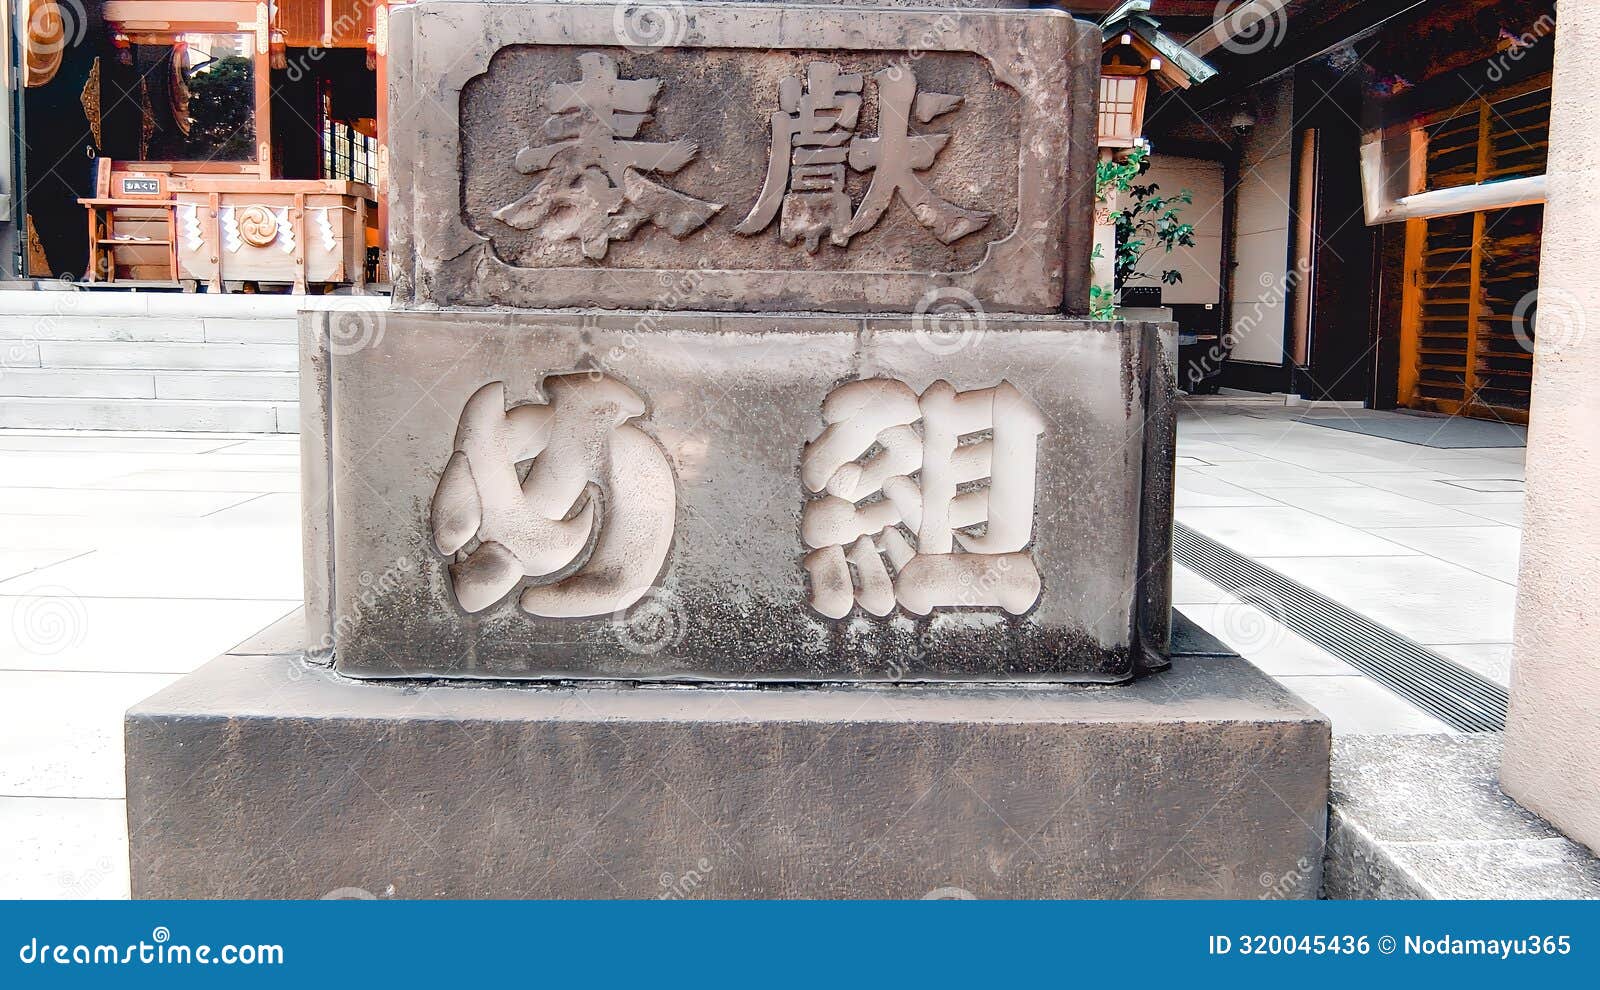 a dedication stone monument engraved with megumi at shiba daijingu